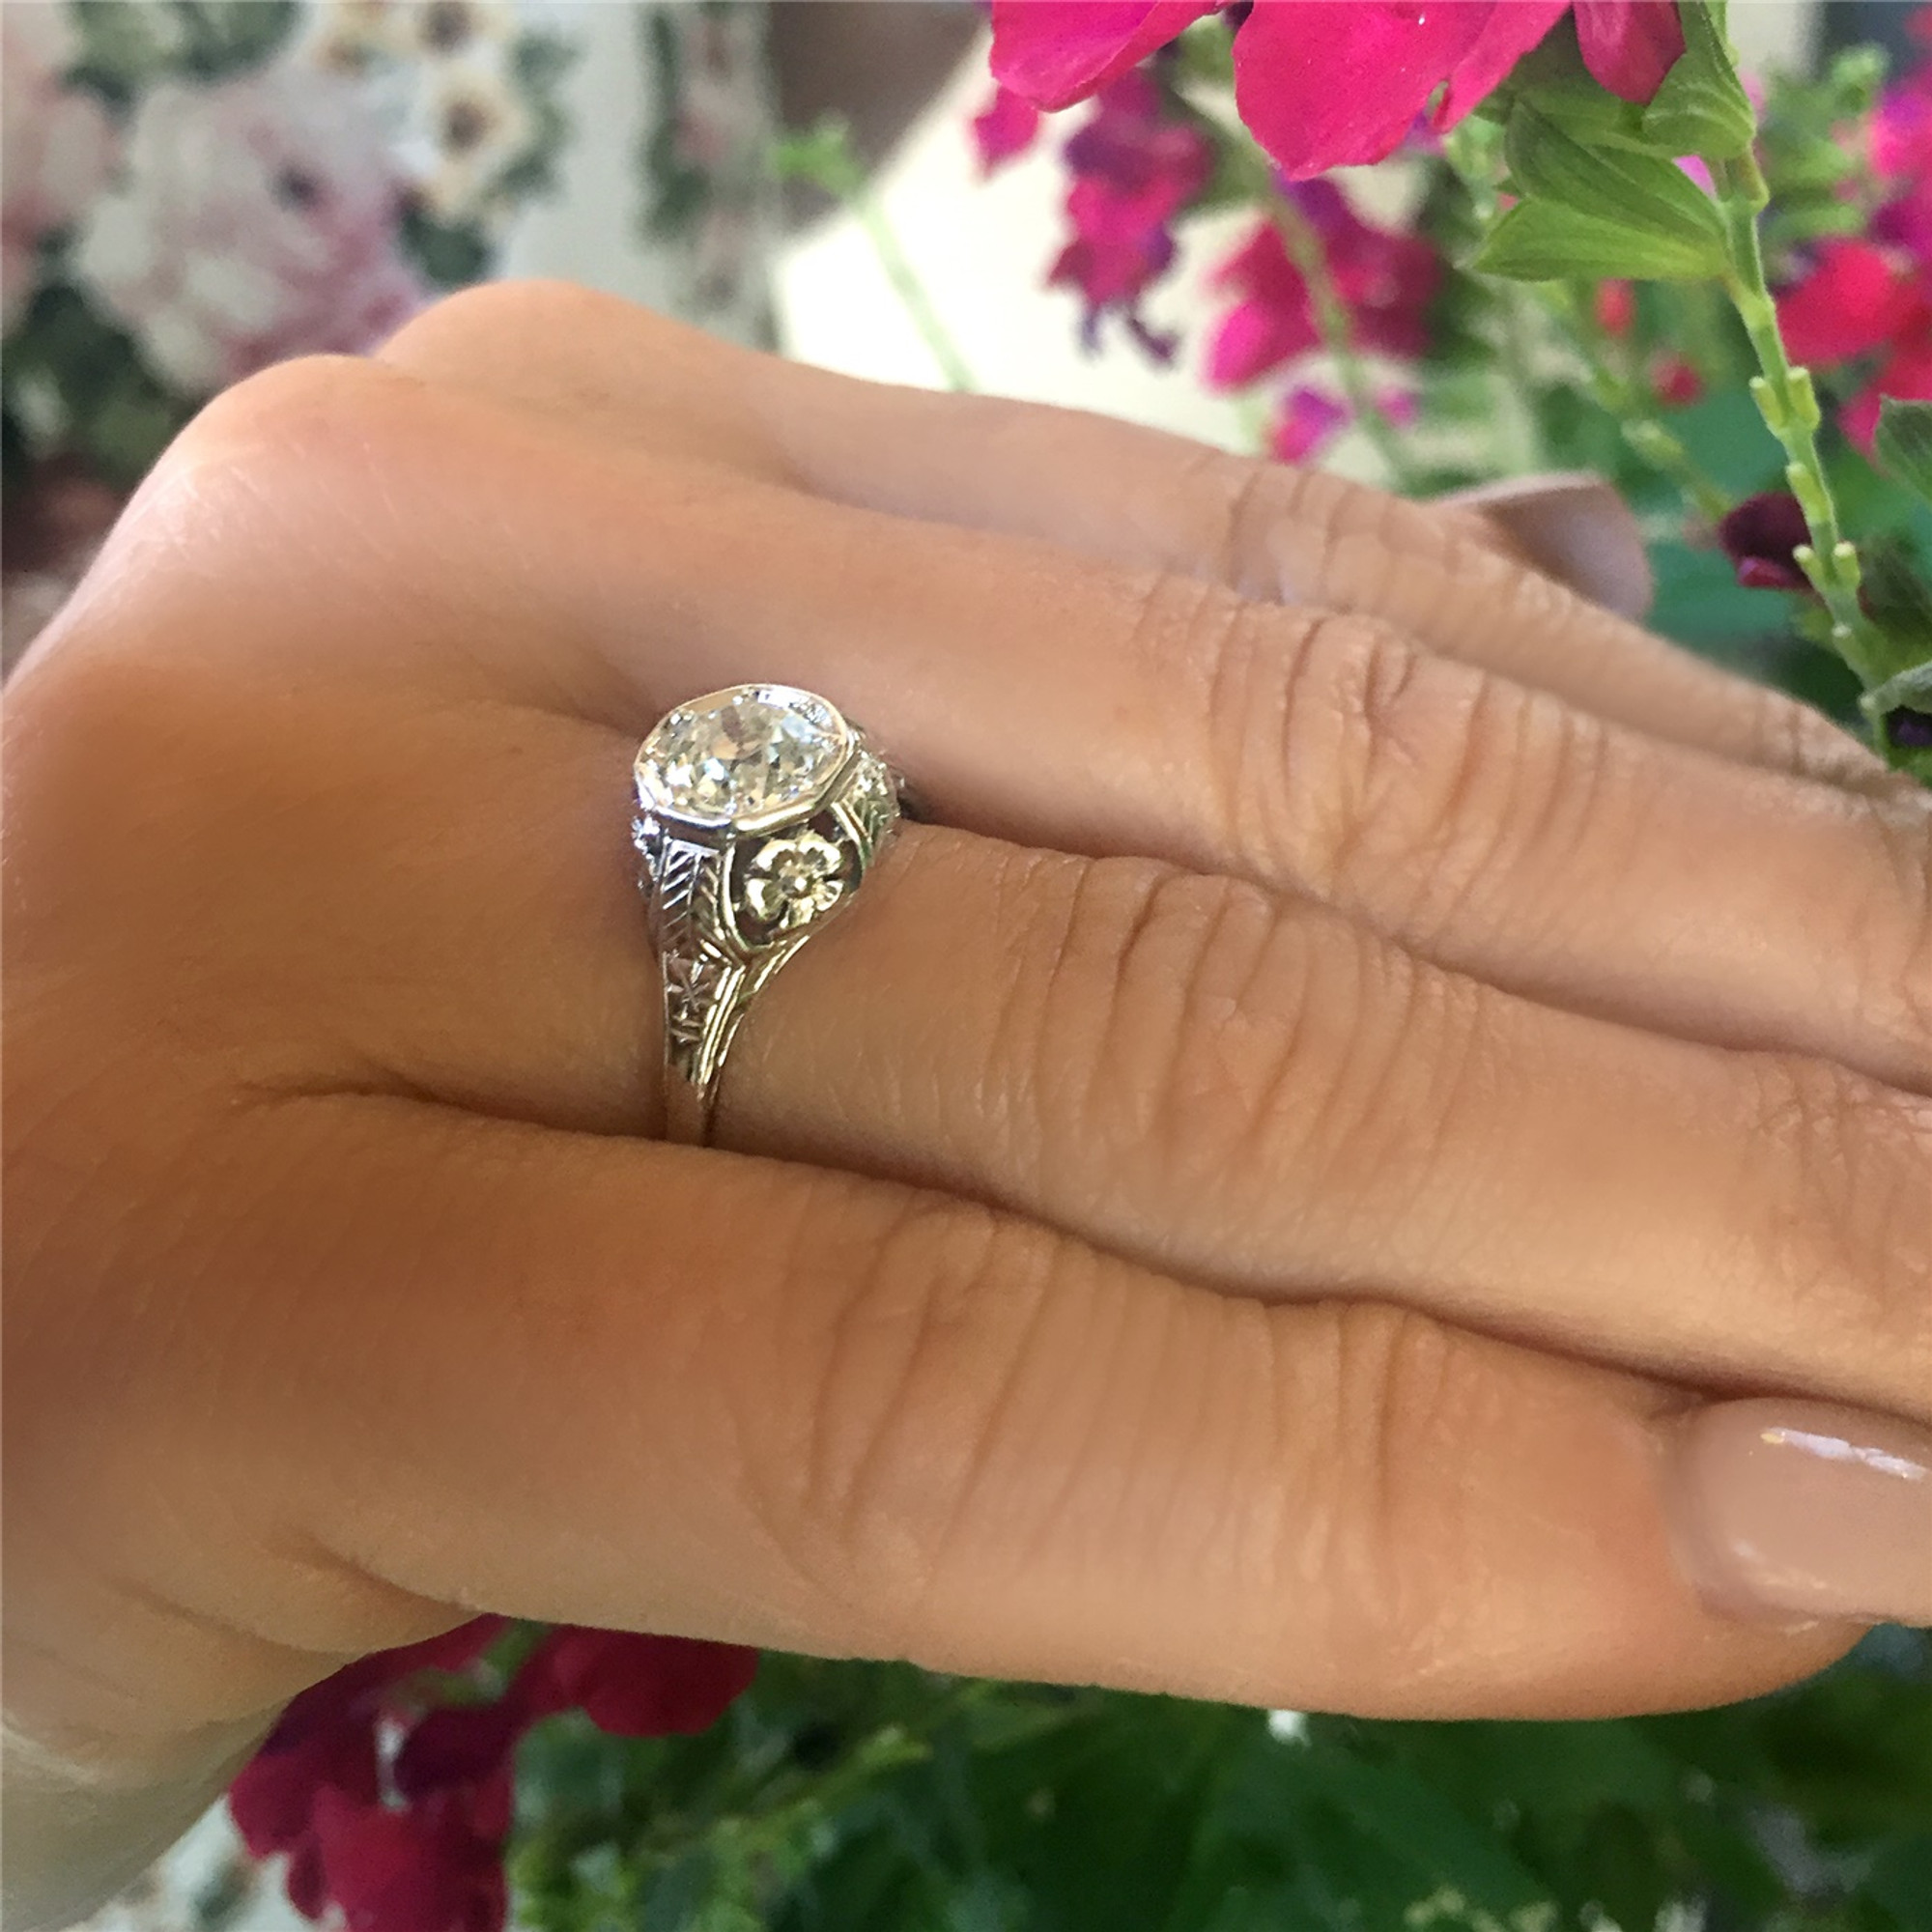 Vintage Art-Deco Filigree Diamond Ring in 14k White Gold | Jewelsmith